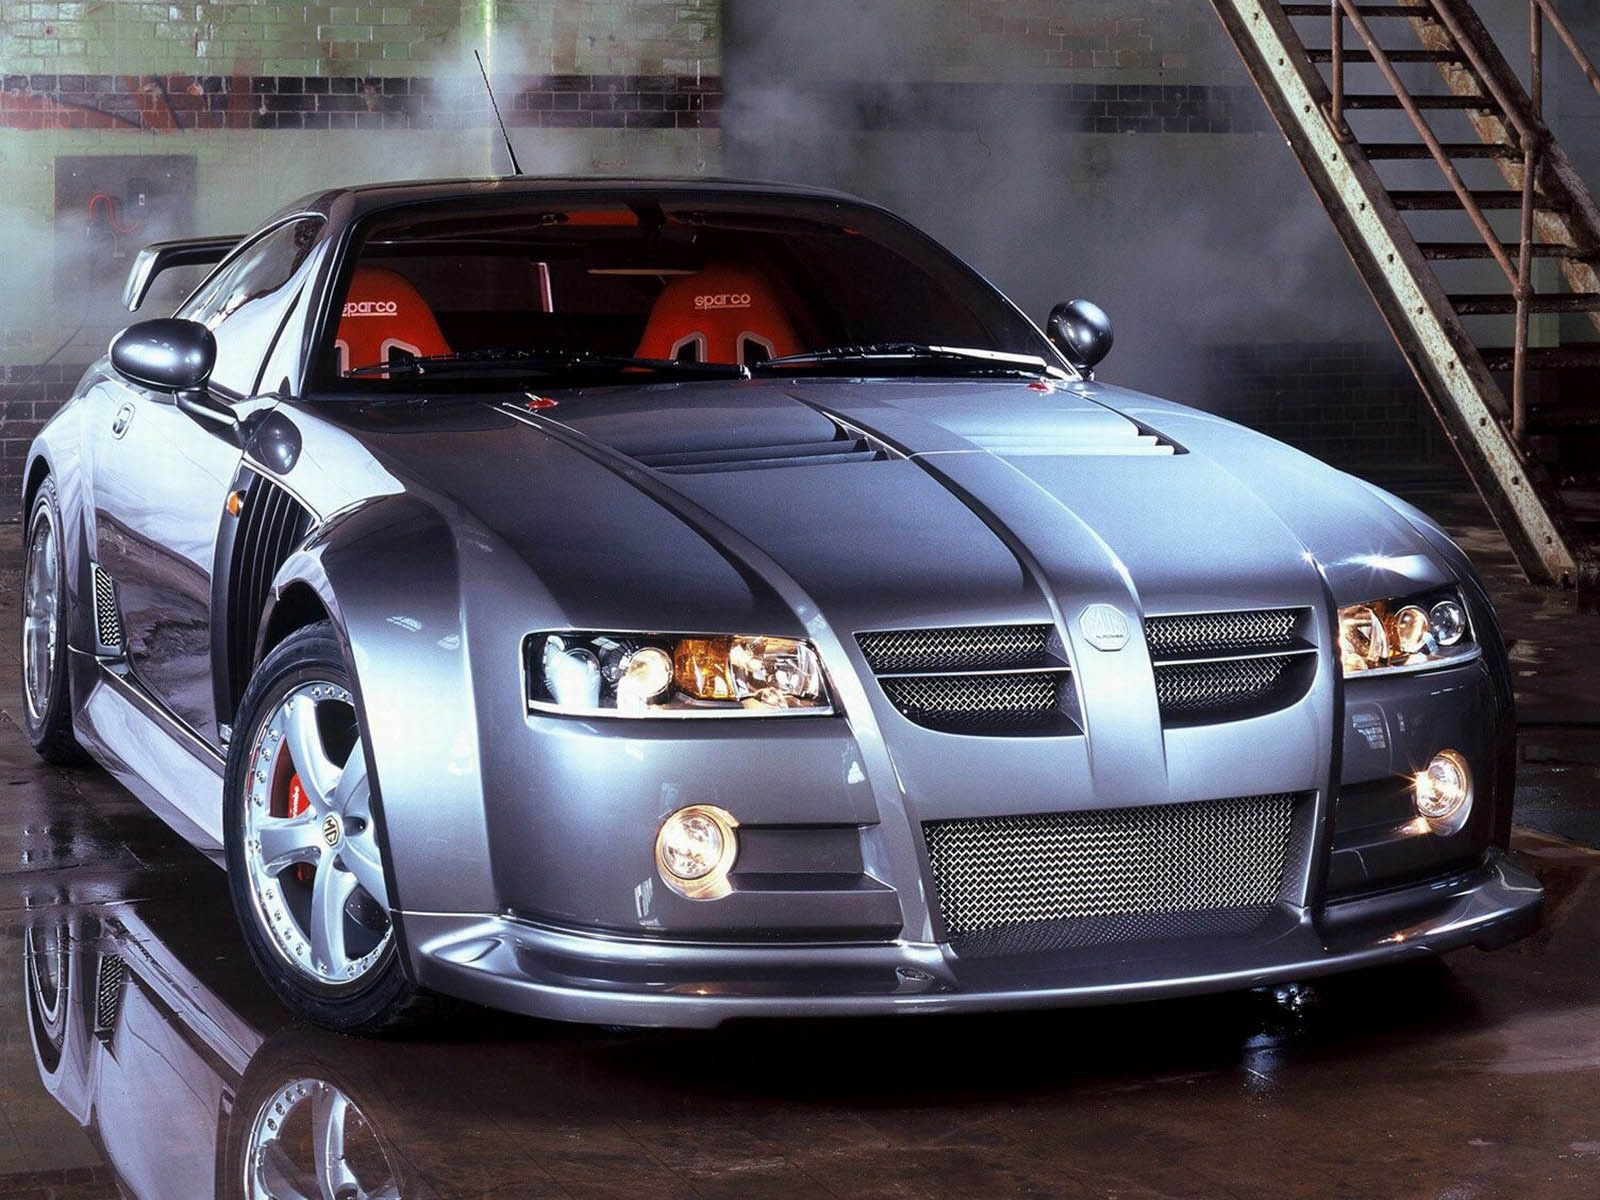 2002 MG Xpower Sv